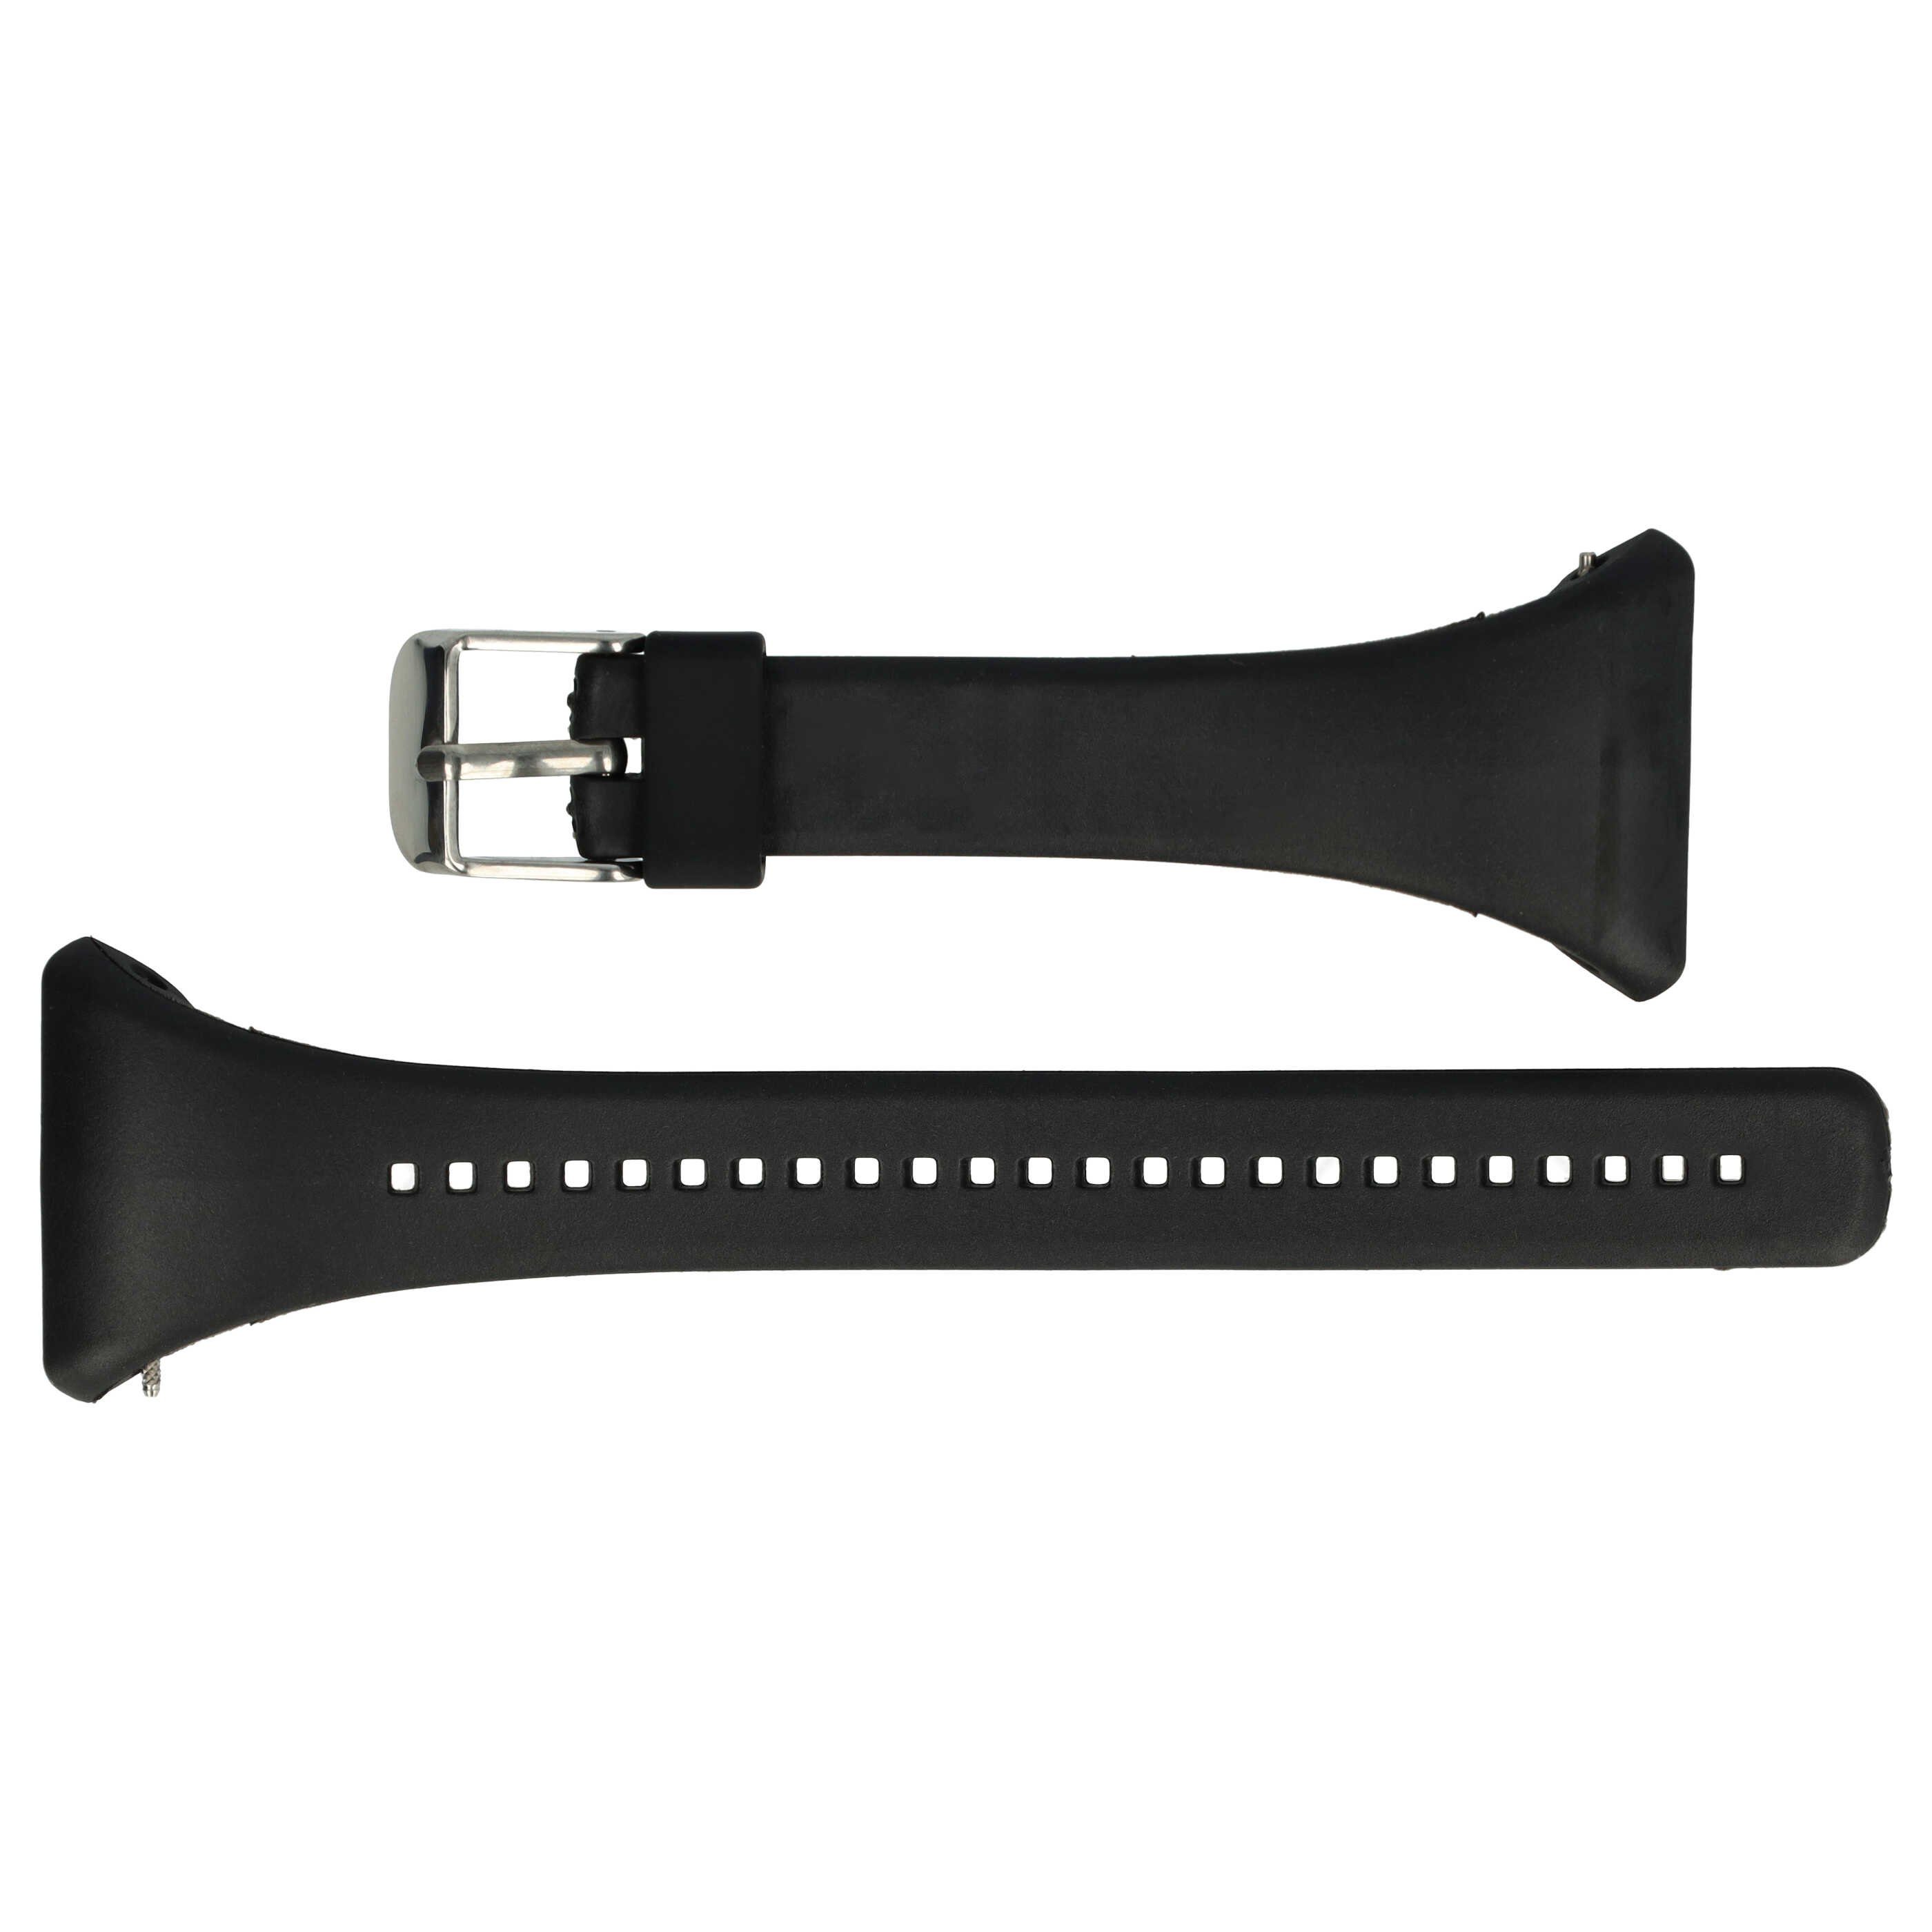 vhbw Smartwatch-Armband passend für Polar FT7m, FT4m, FT4f, FT7, FT4 Smartwatch